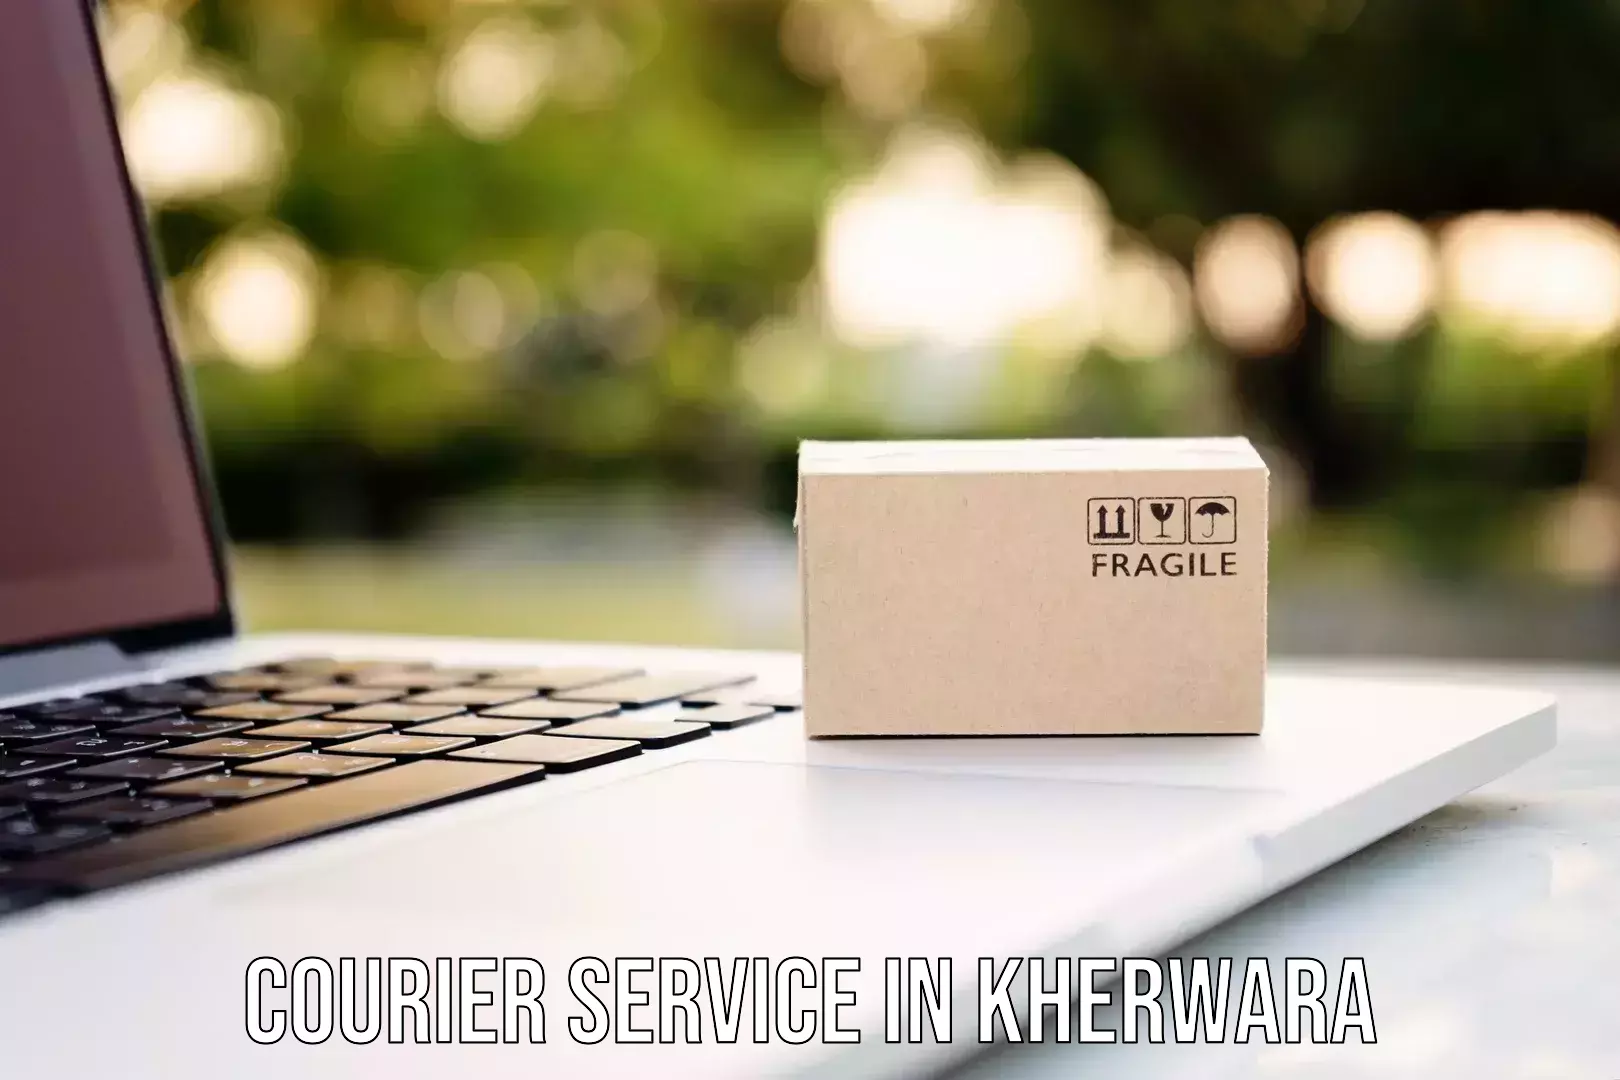 Courier service efficiency in Kherwara